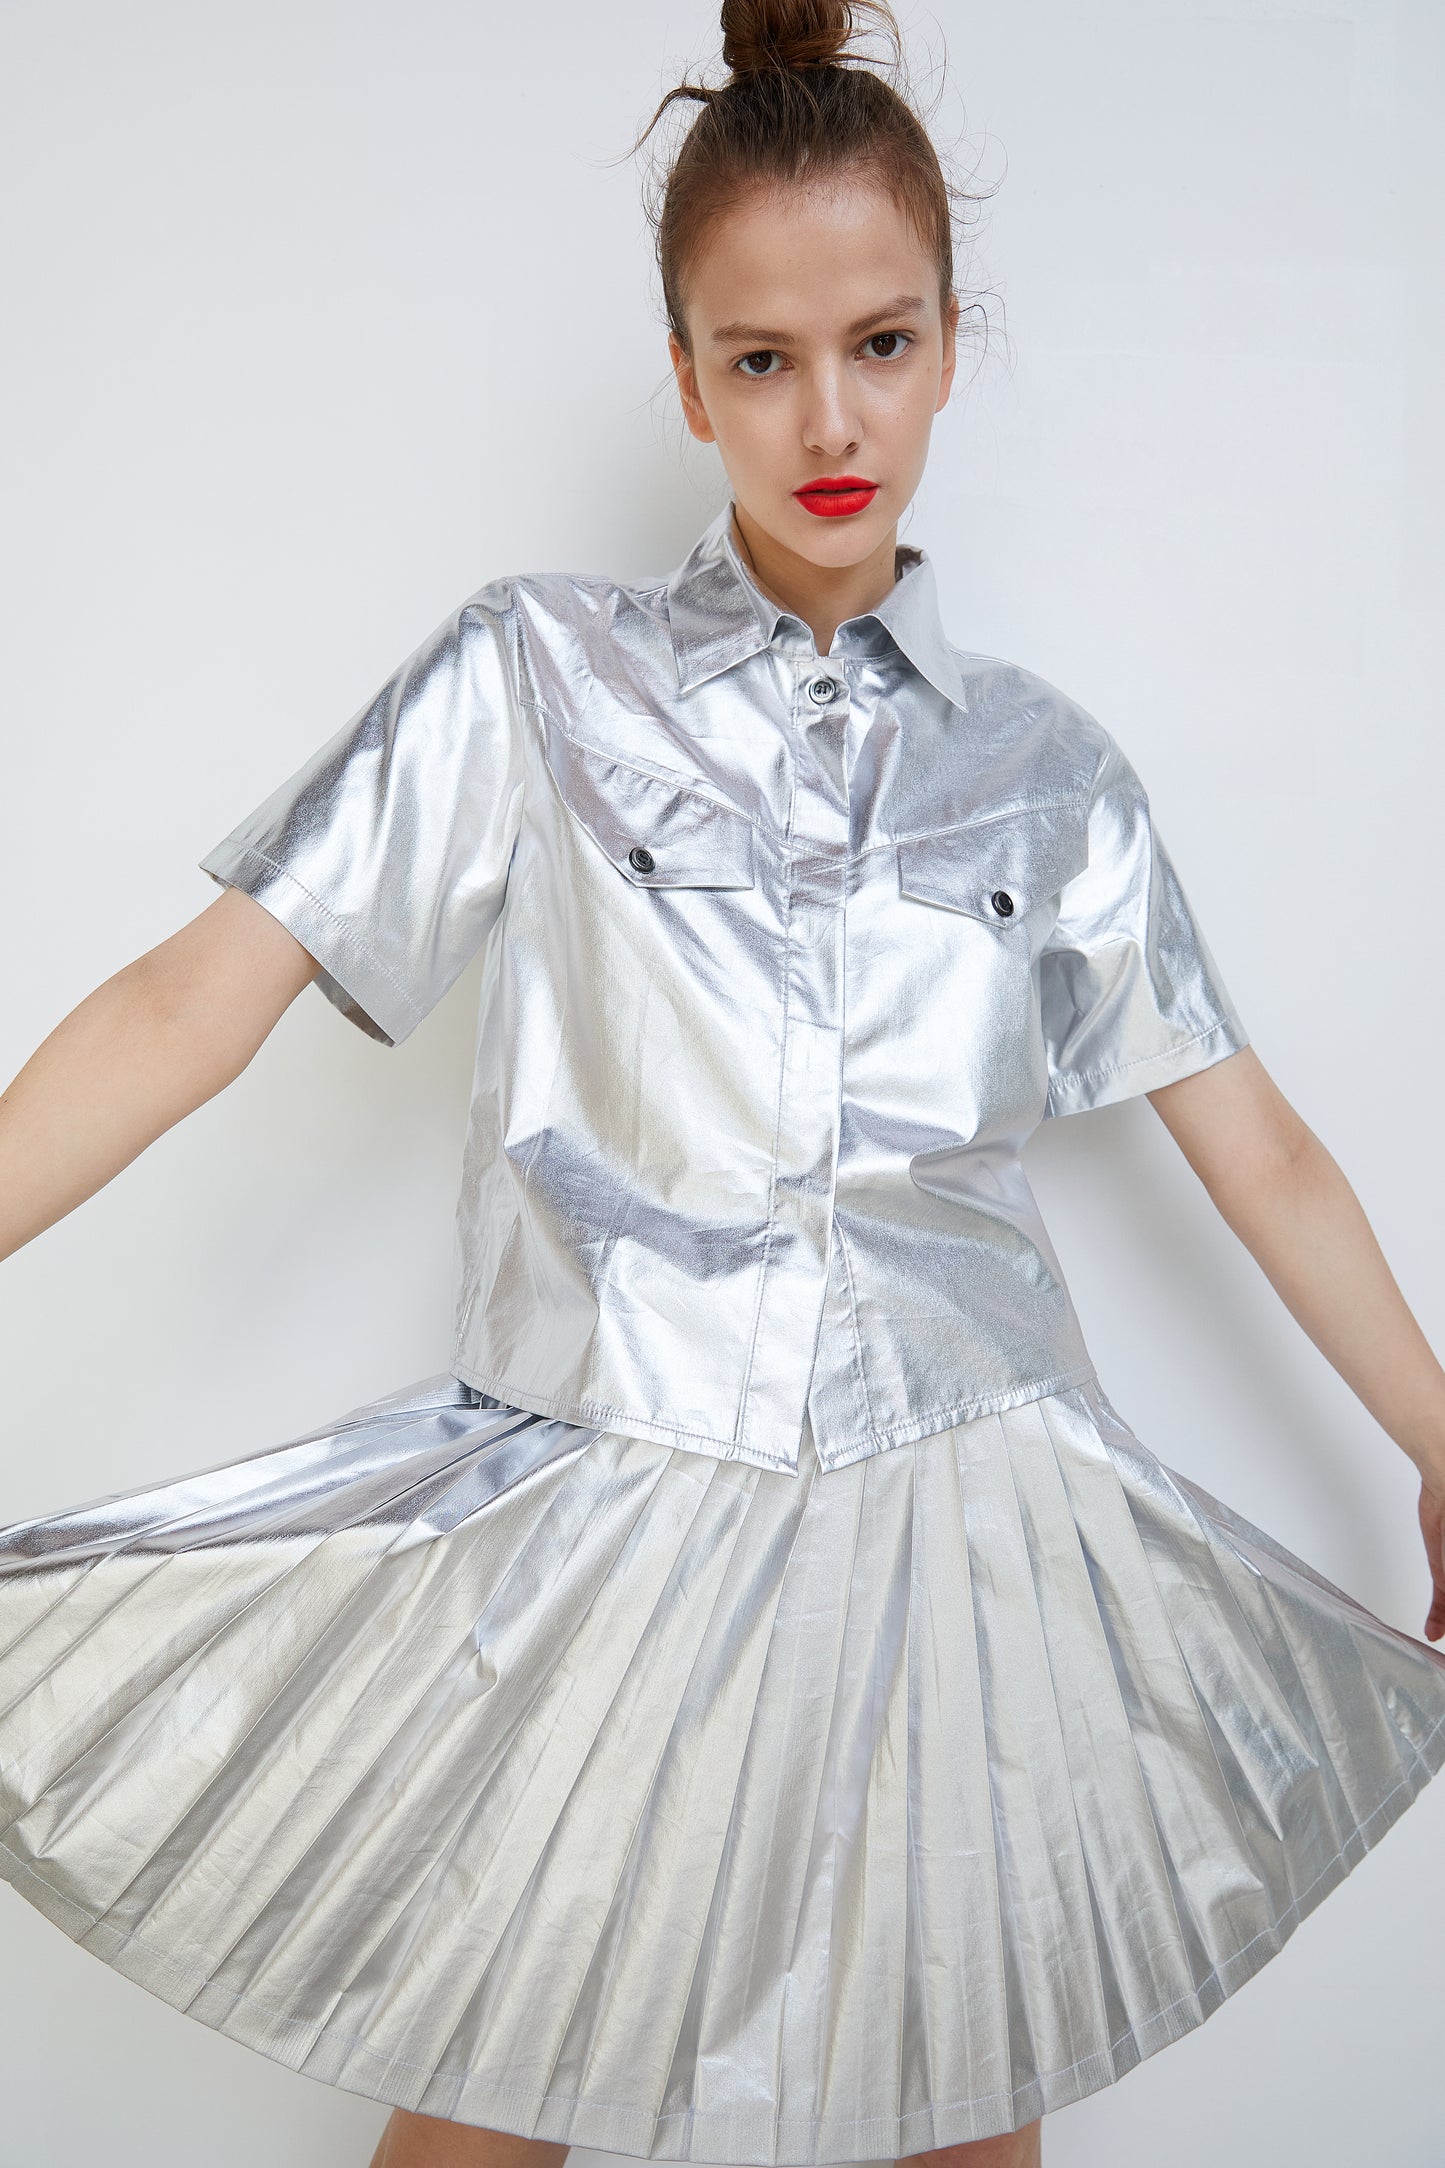 Metallic Pleated Skirt, Silver